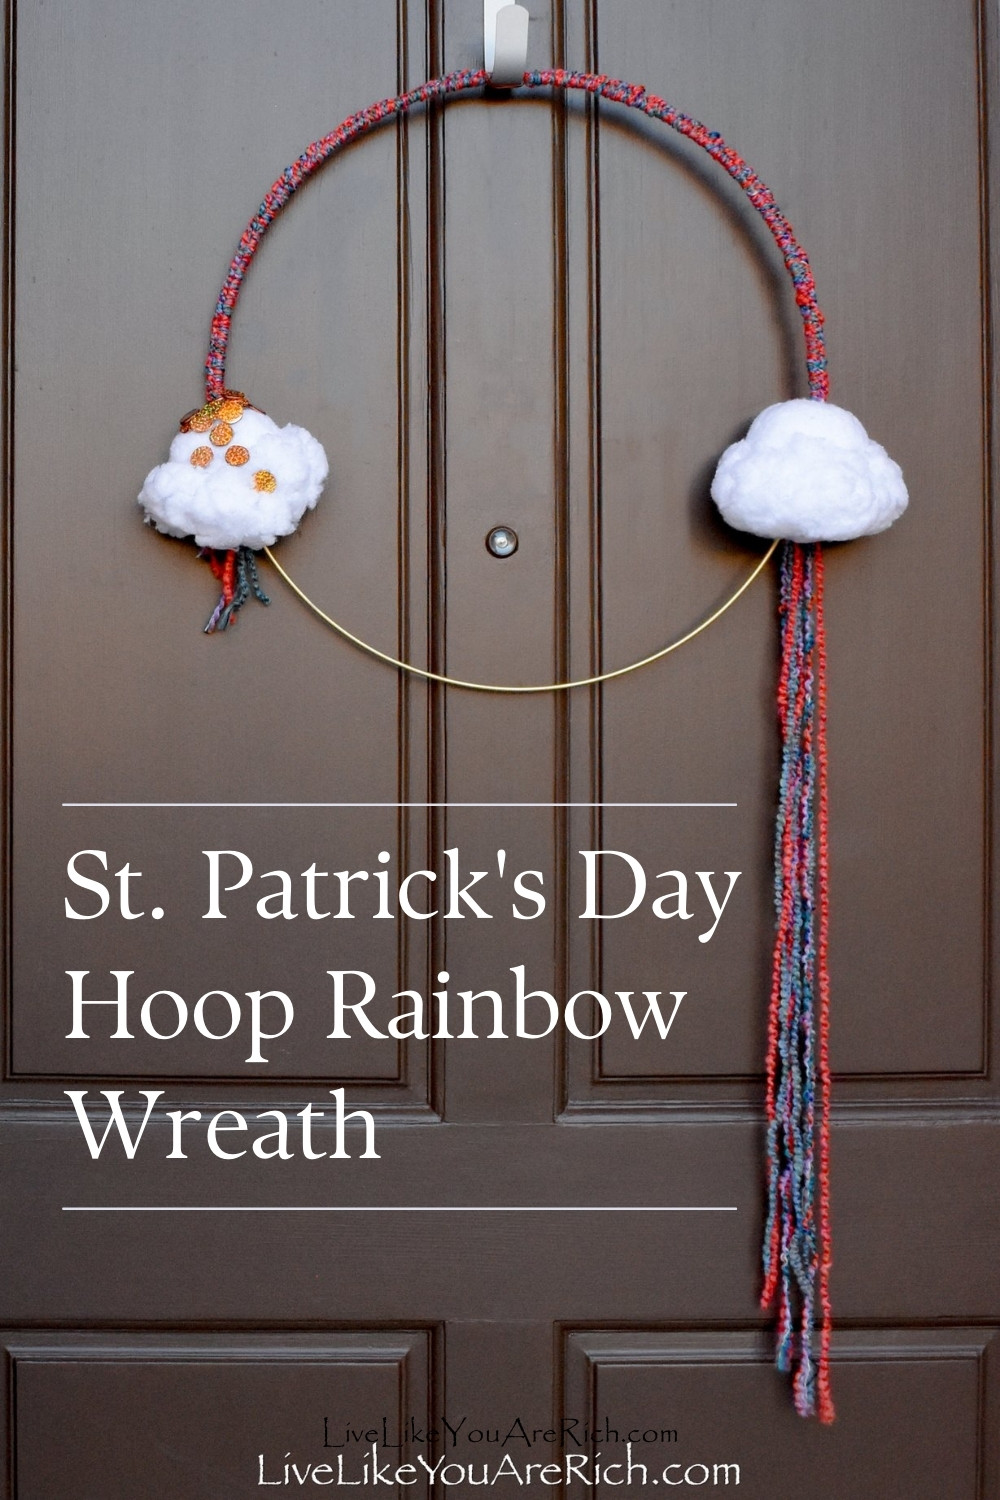 St. Patrick's Day Hoop Rainbow Wreath